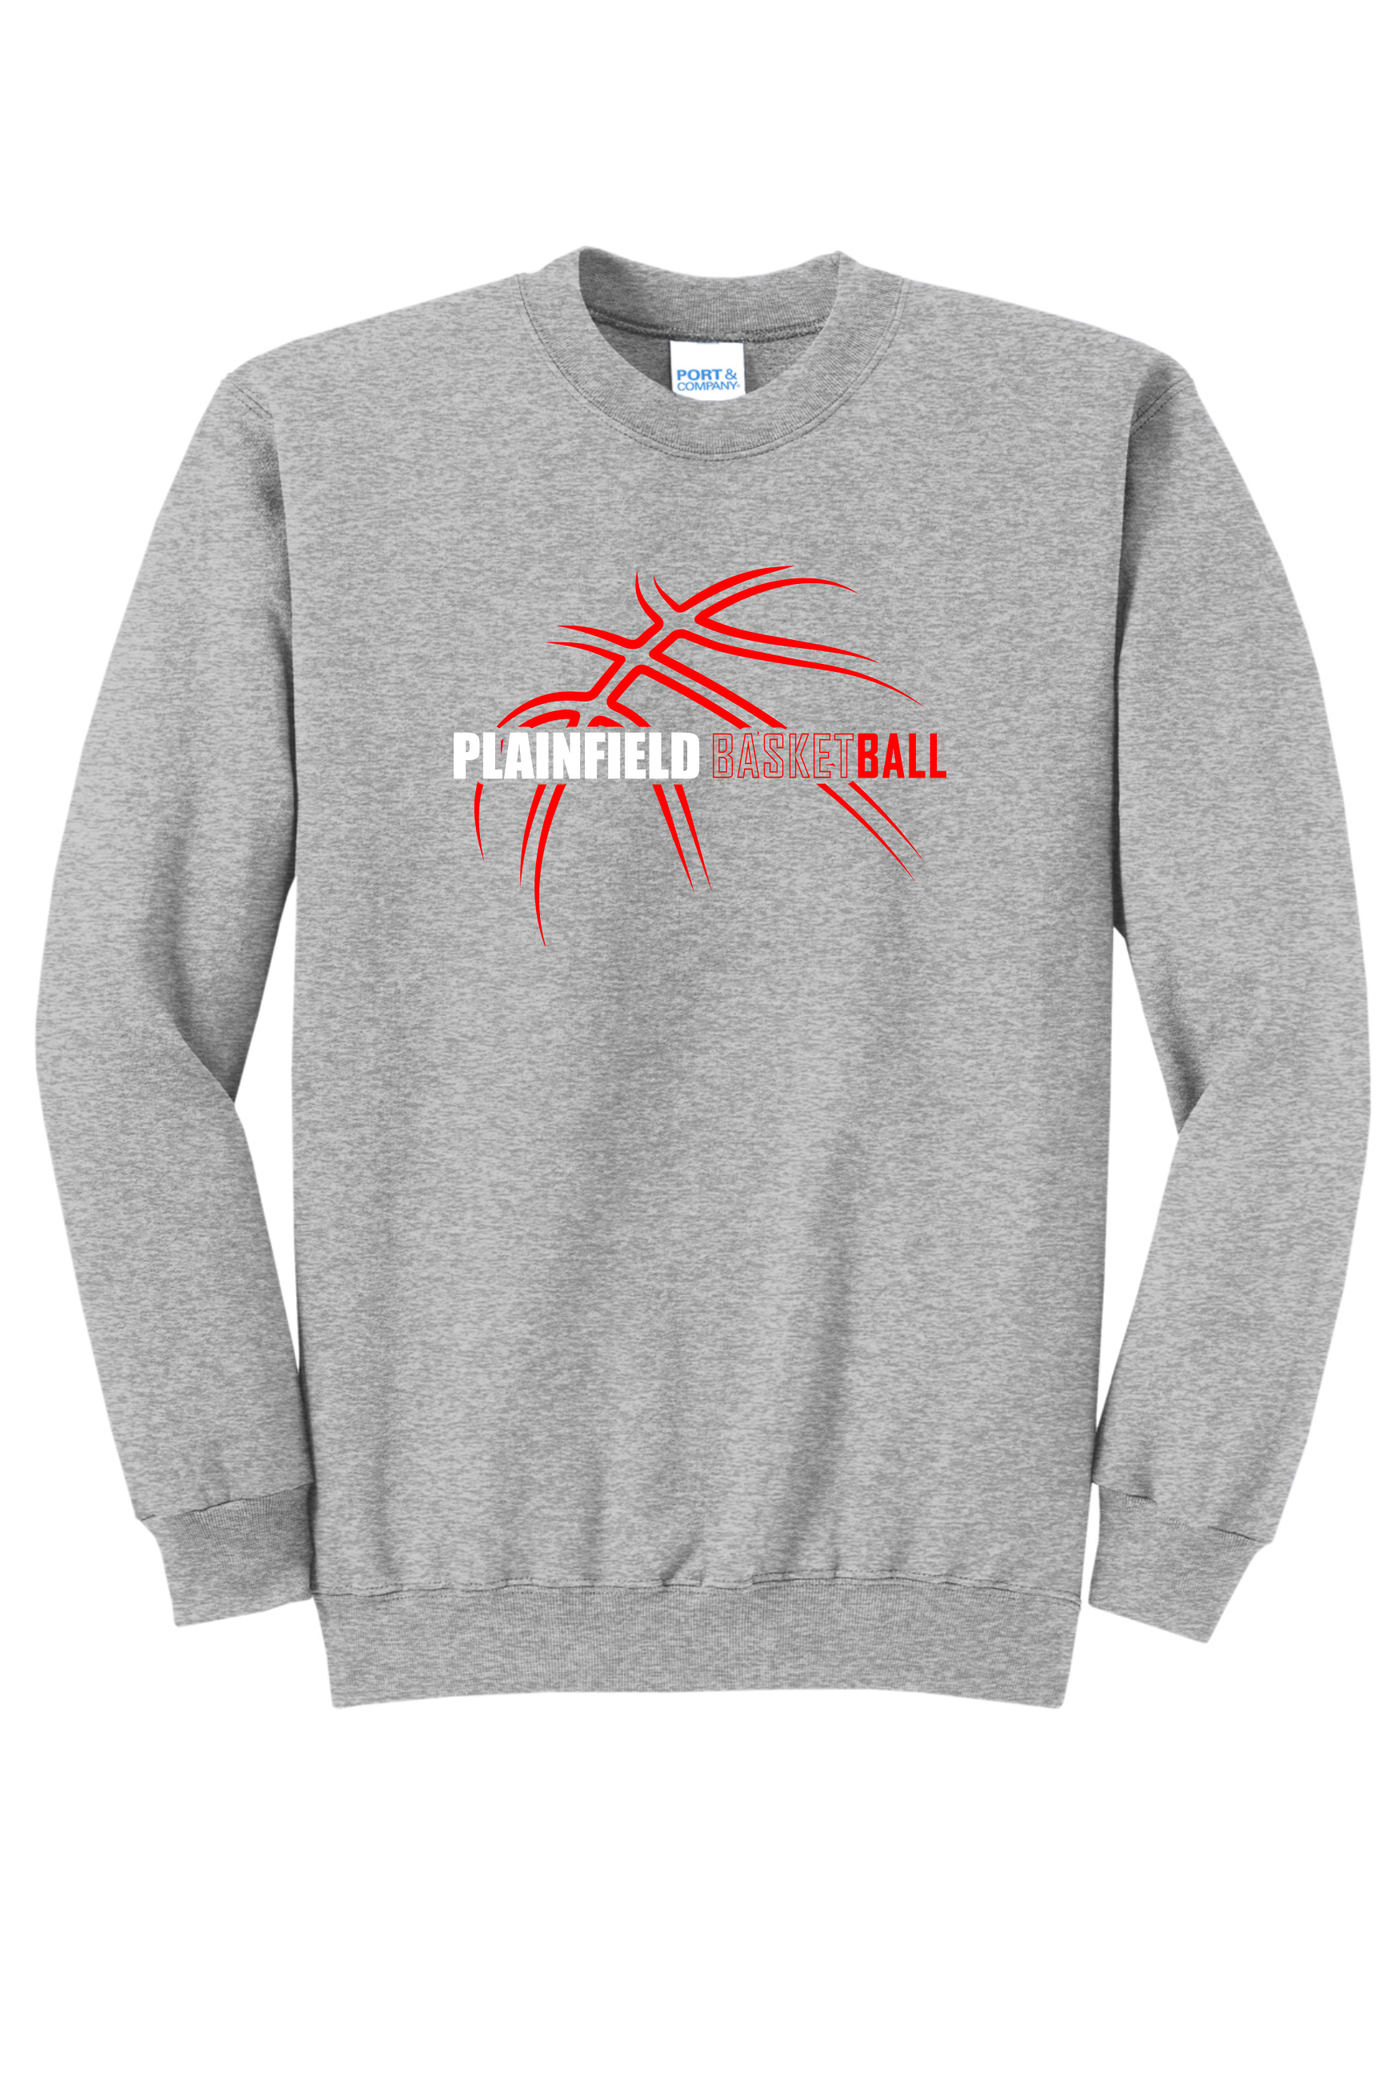 Plainfield Crewneck Sweatshirt - C2 ADULT - Y&S Designs, LLC